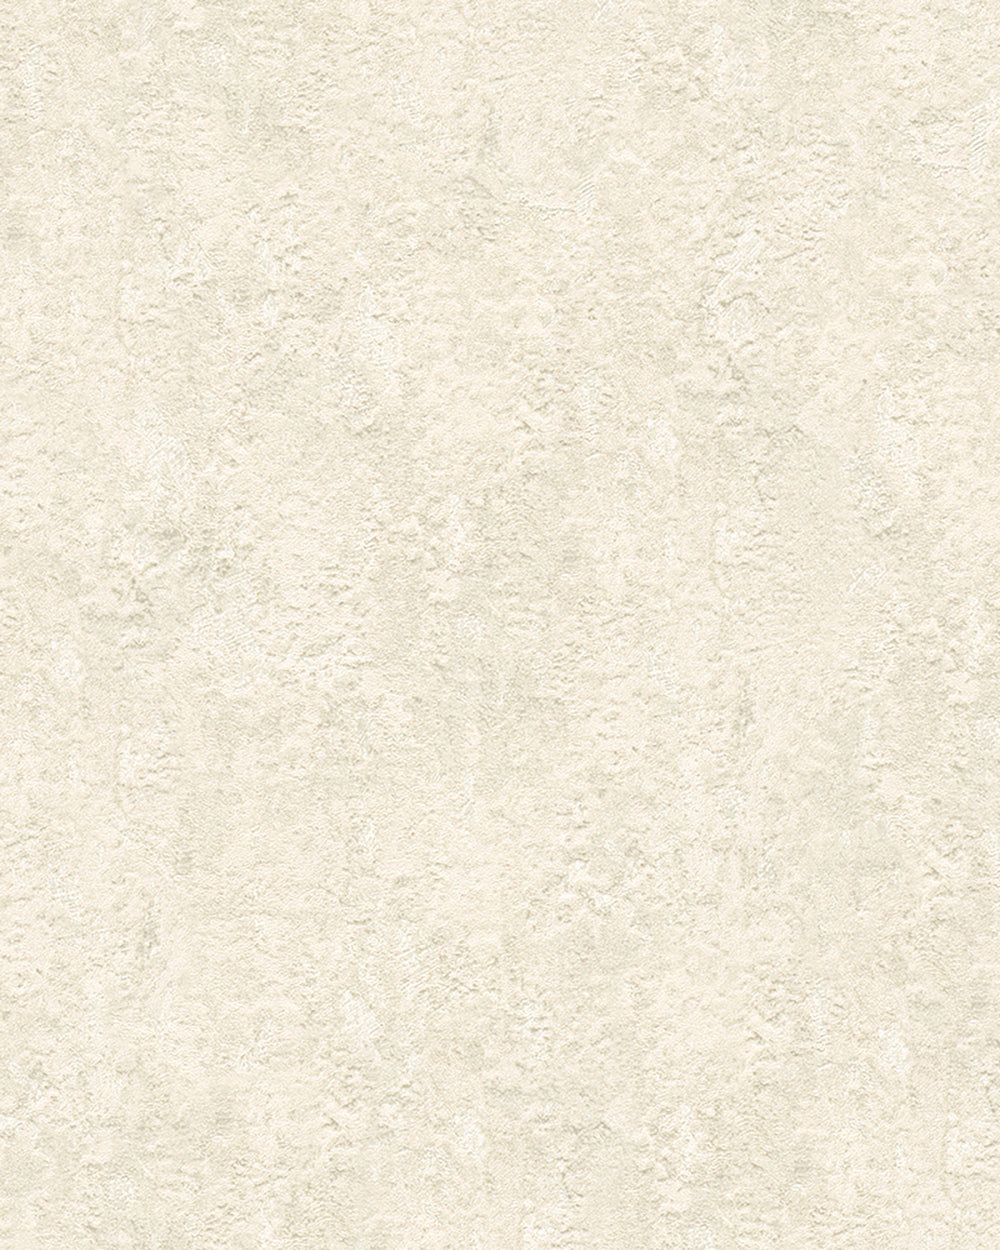 Avalon - Textured Distressed Concrete bold wallpaper Marburg Roll Cream  31643